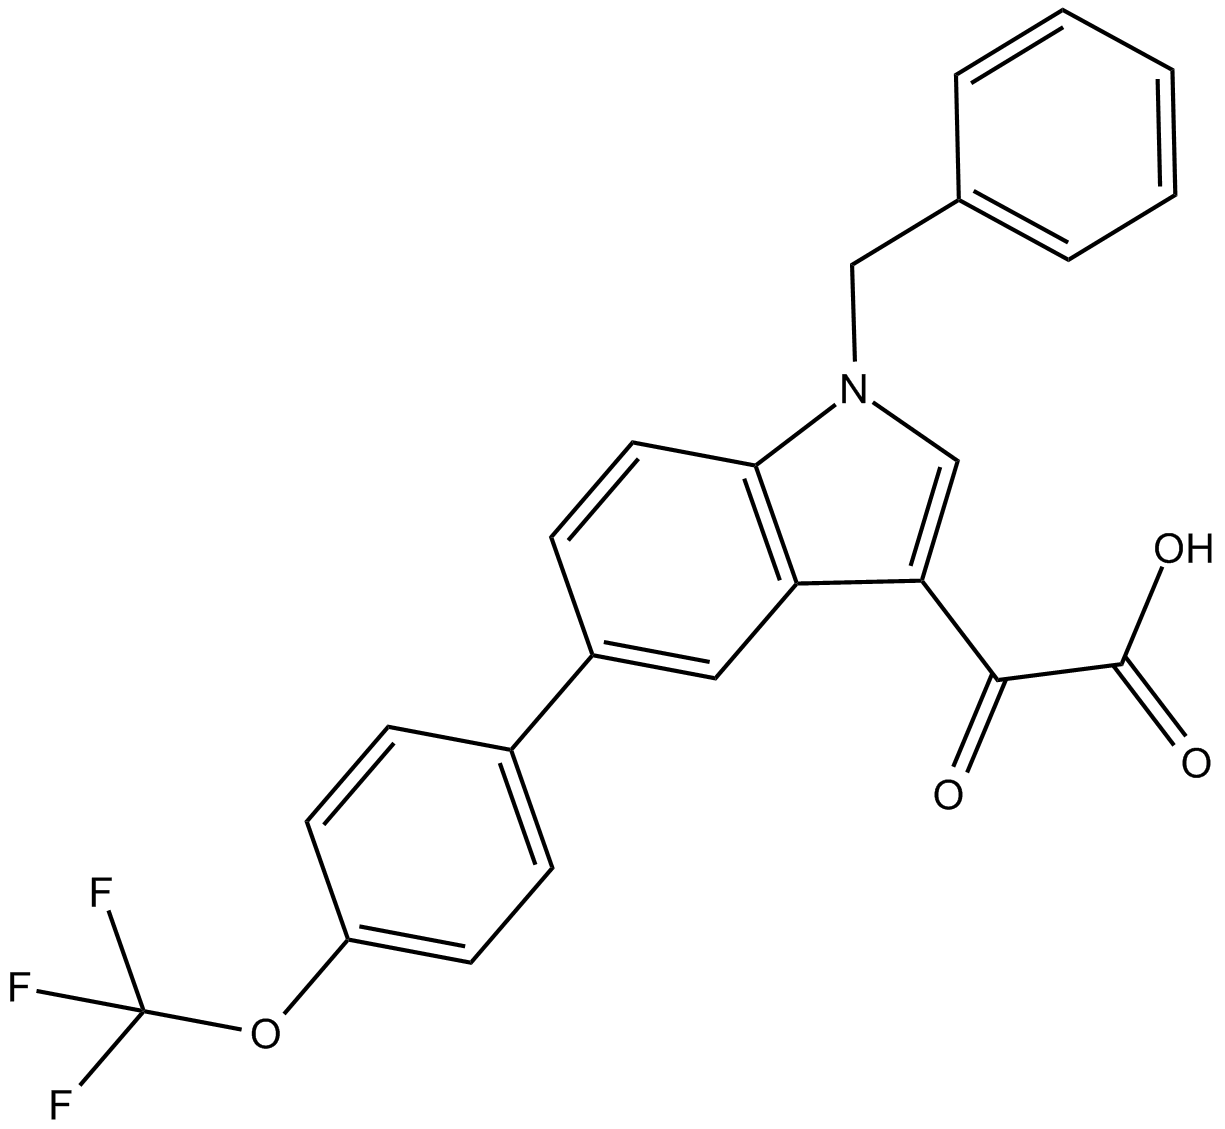 Tiplaxtinin(PAI-039) التركيب الكيميائي